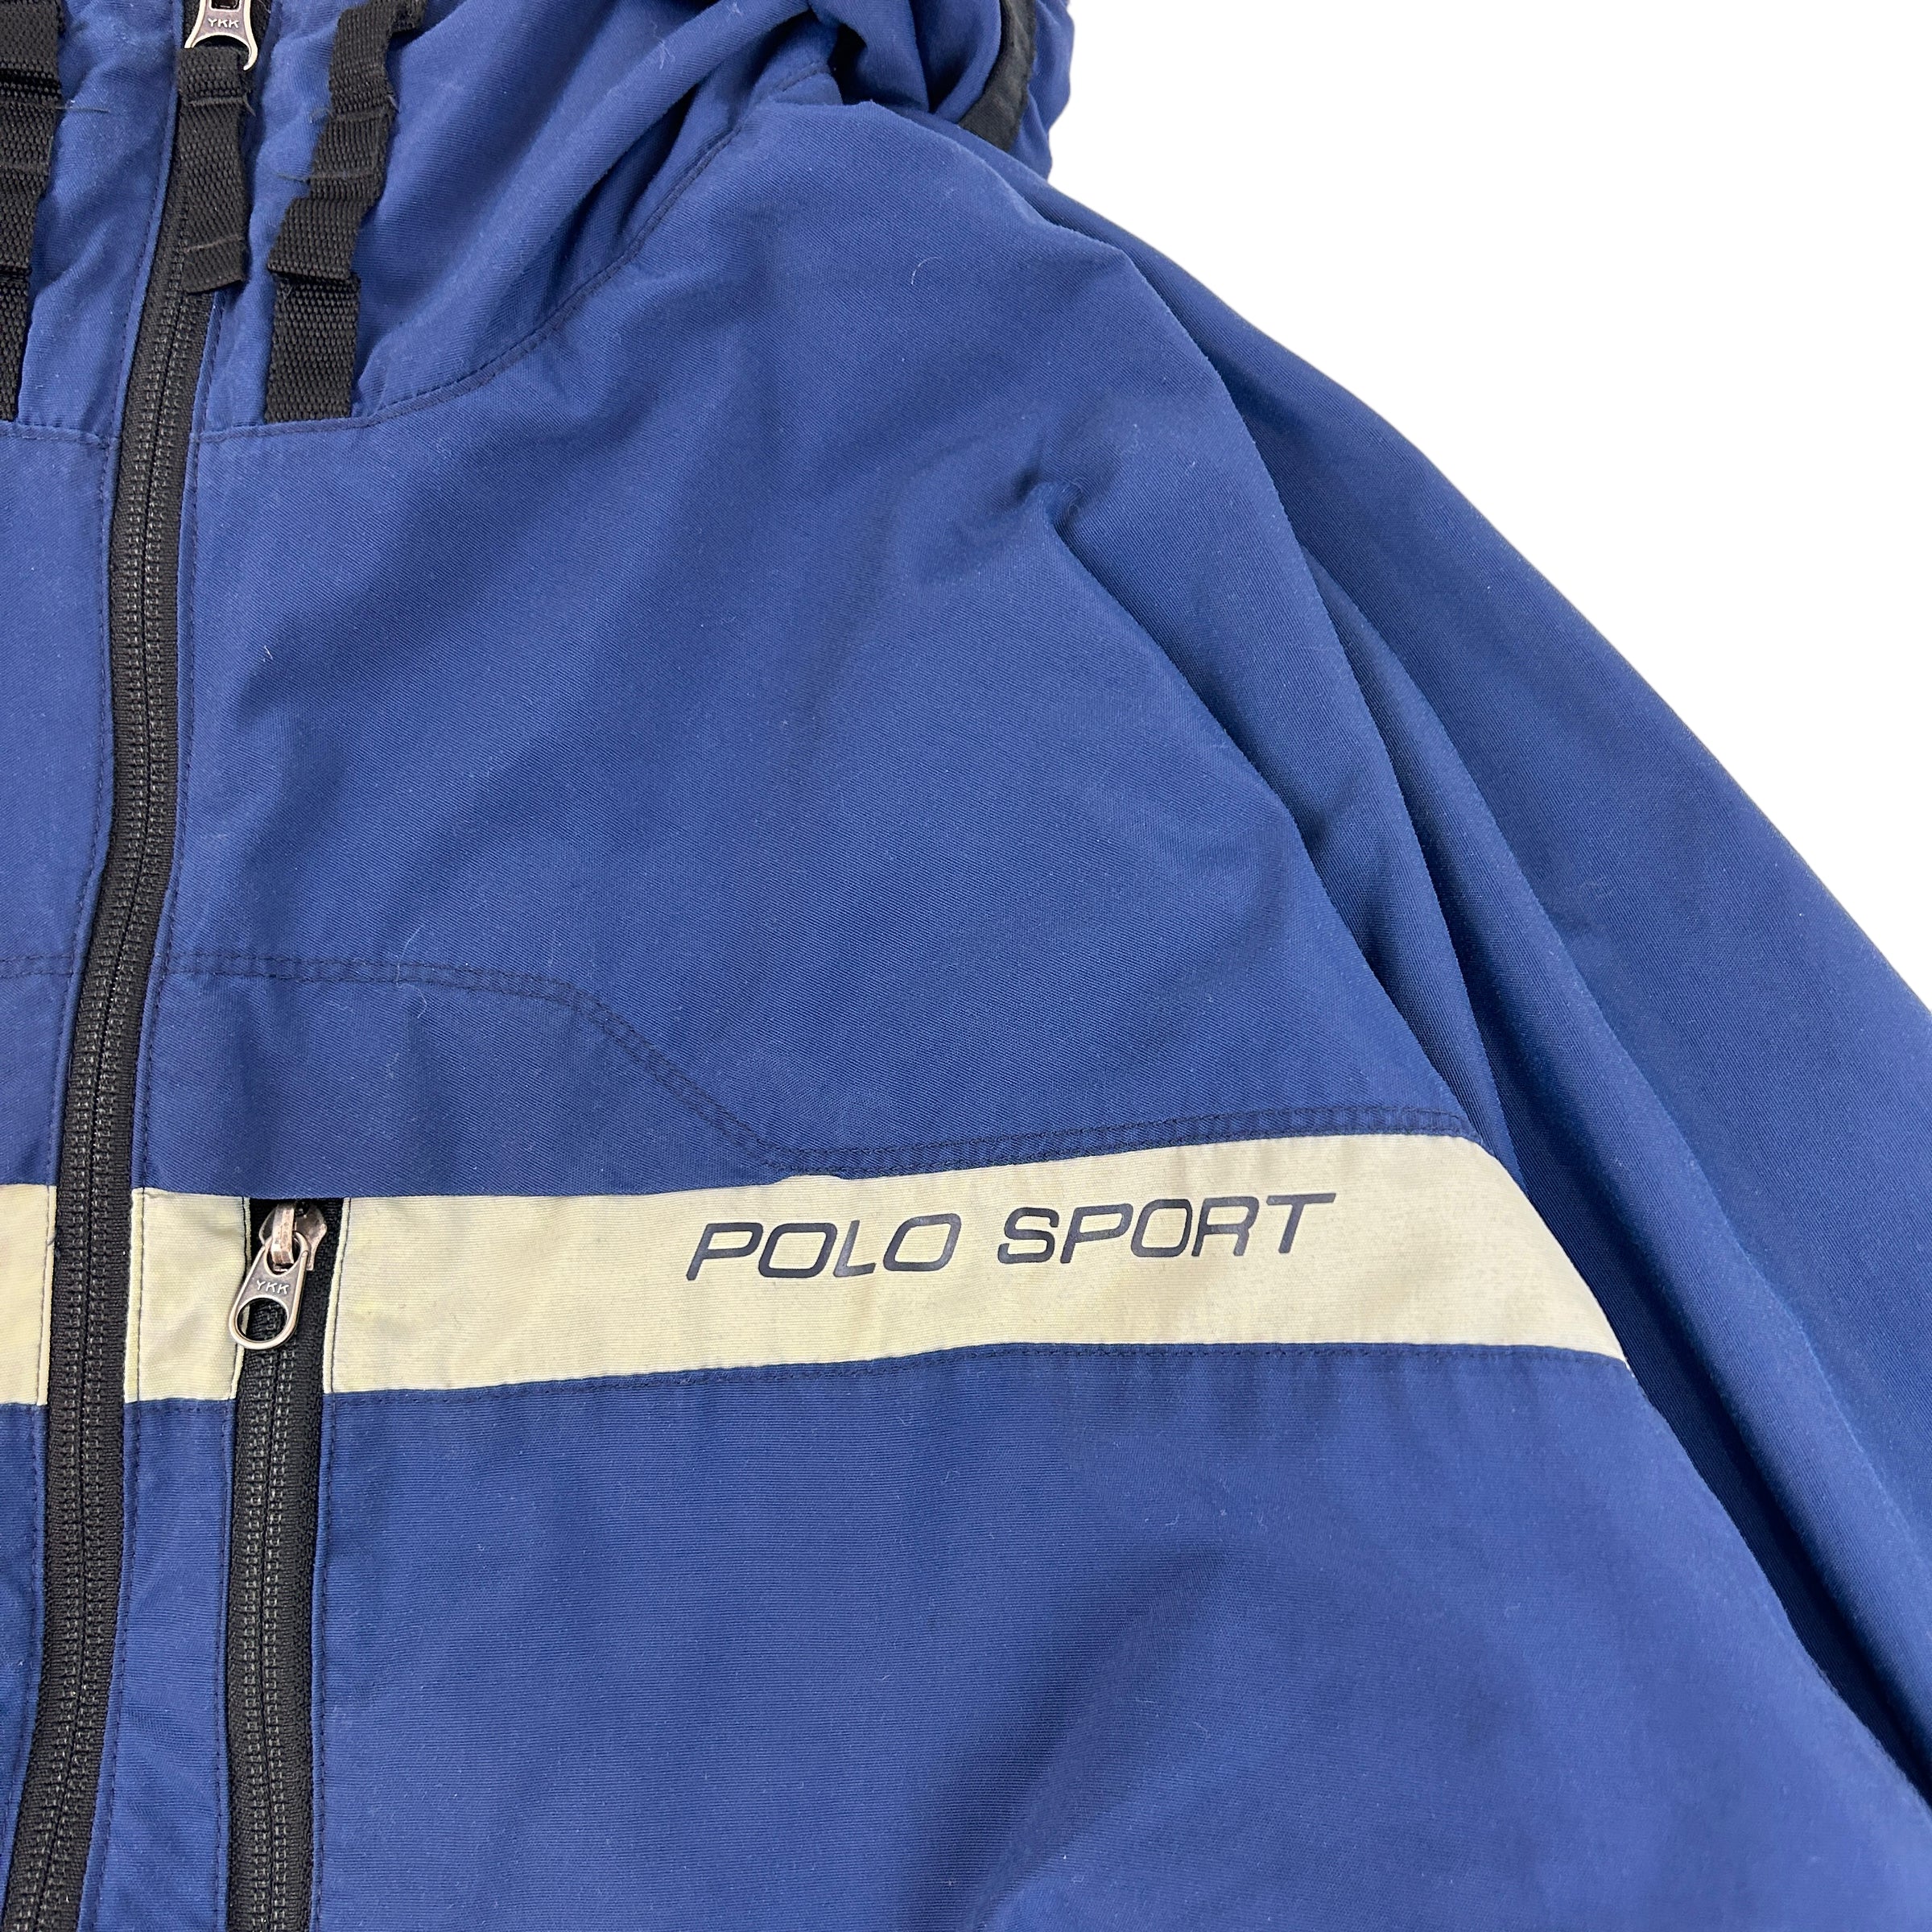 Vintage Polo Sport Technical Jacket Navy